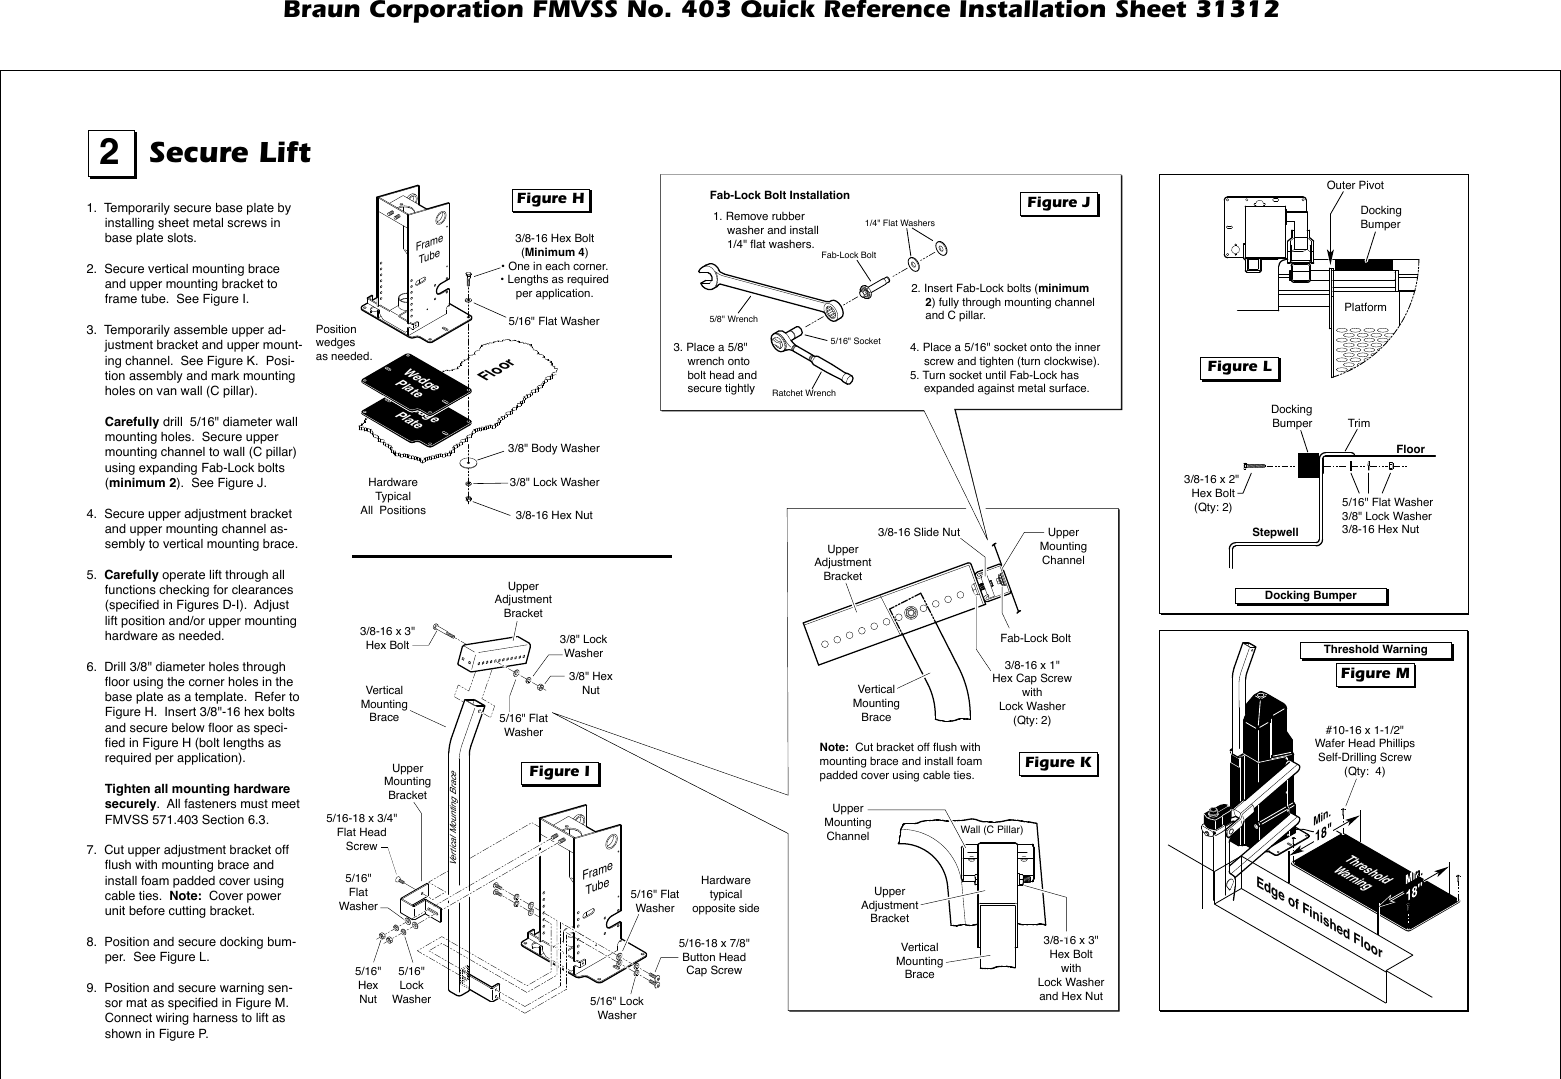 Page 2 of 8 - Braun Braun-Corporation-Fmvss-No-403-403-Users-Manual-  Braun-corporation-fmvss-no-403-403-users-manual